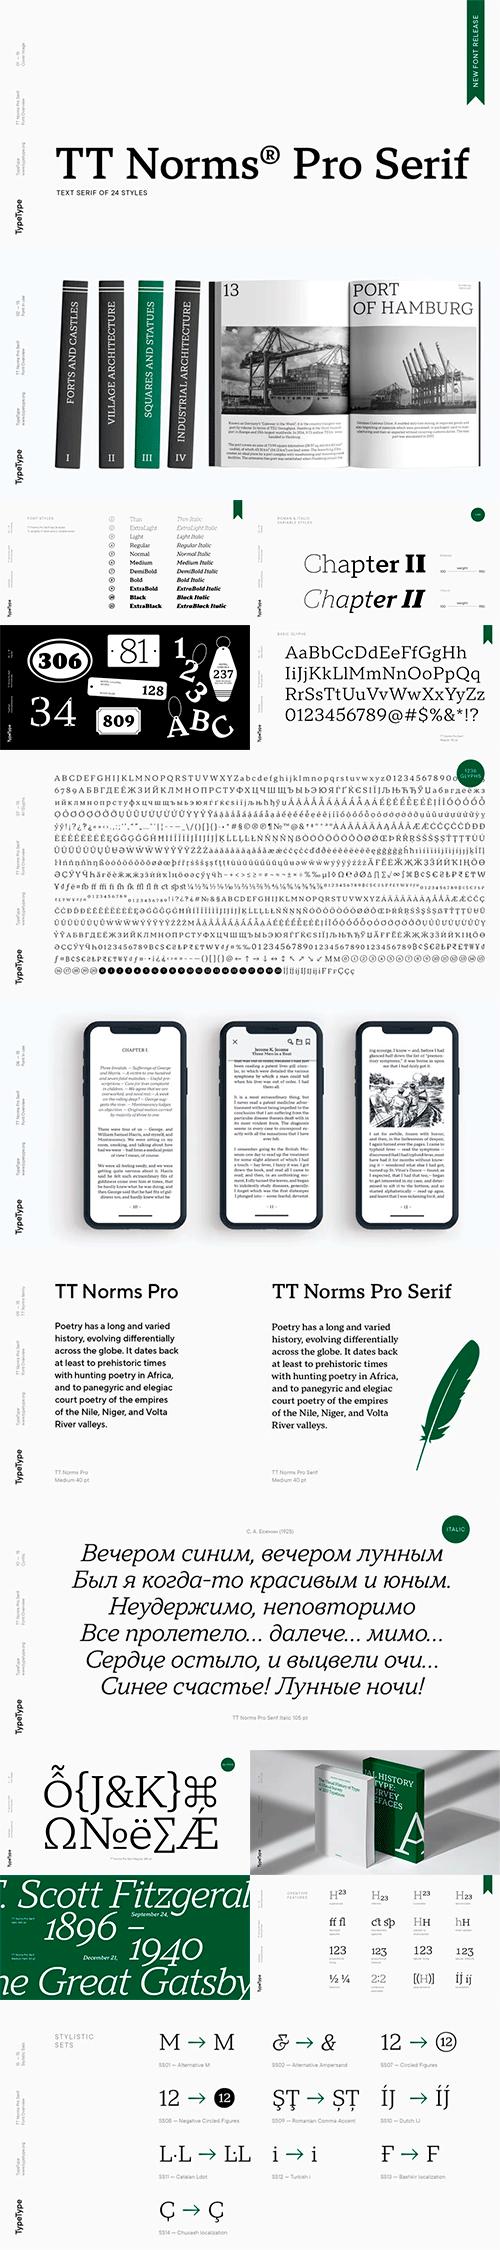 TT Norms Pro Serif font family